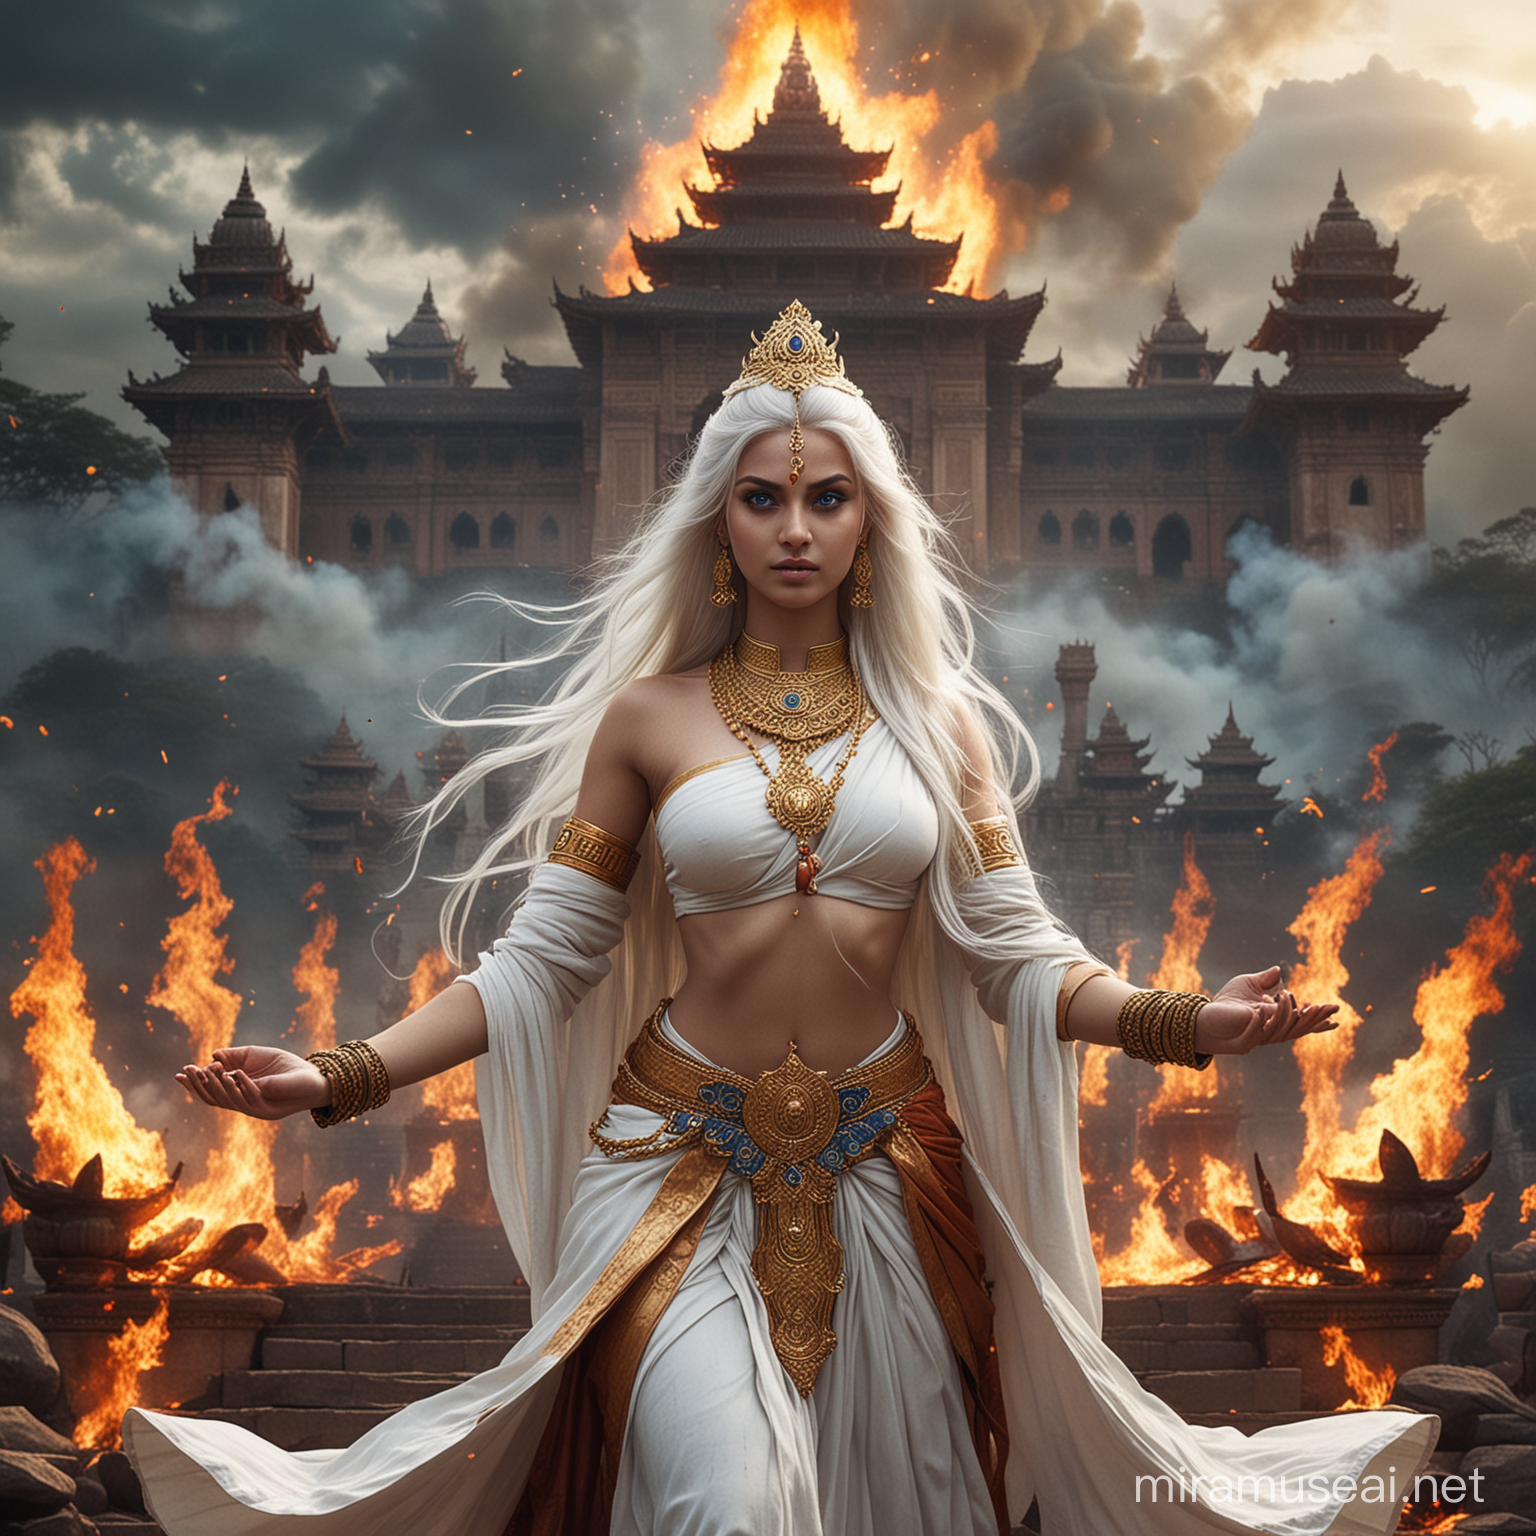 Empress Kayashiel in Fiery Combat with Hindu Deities